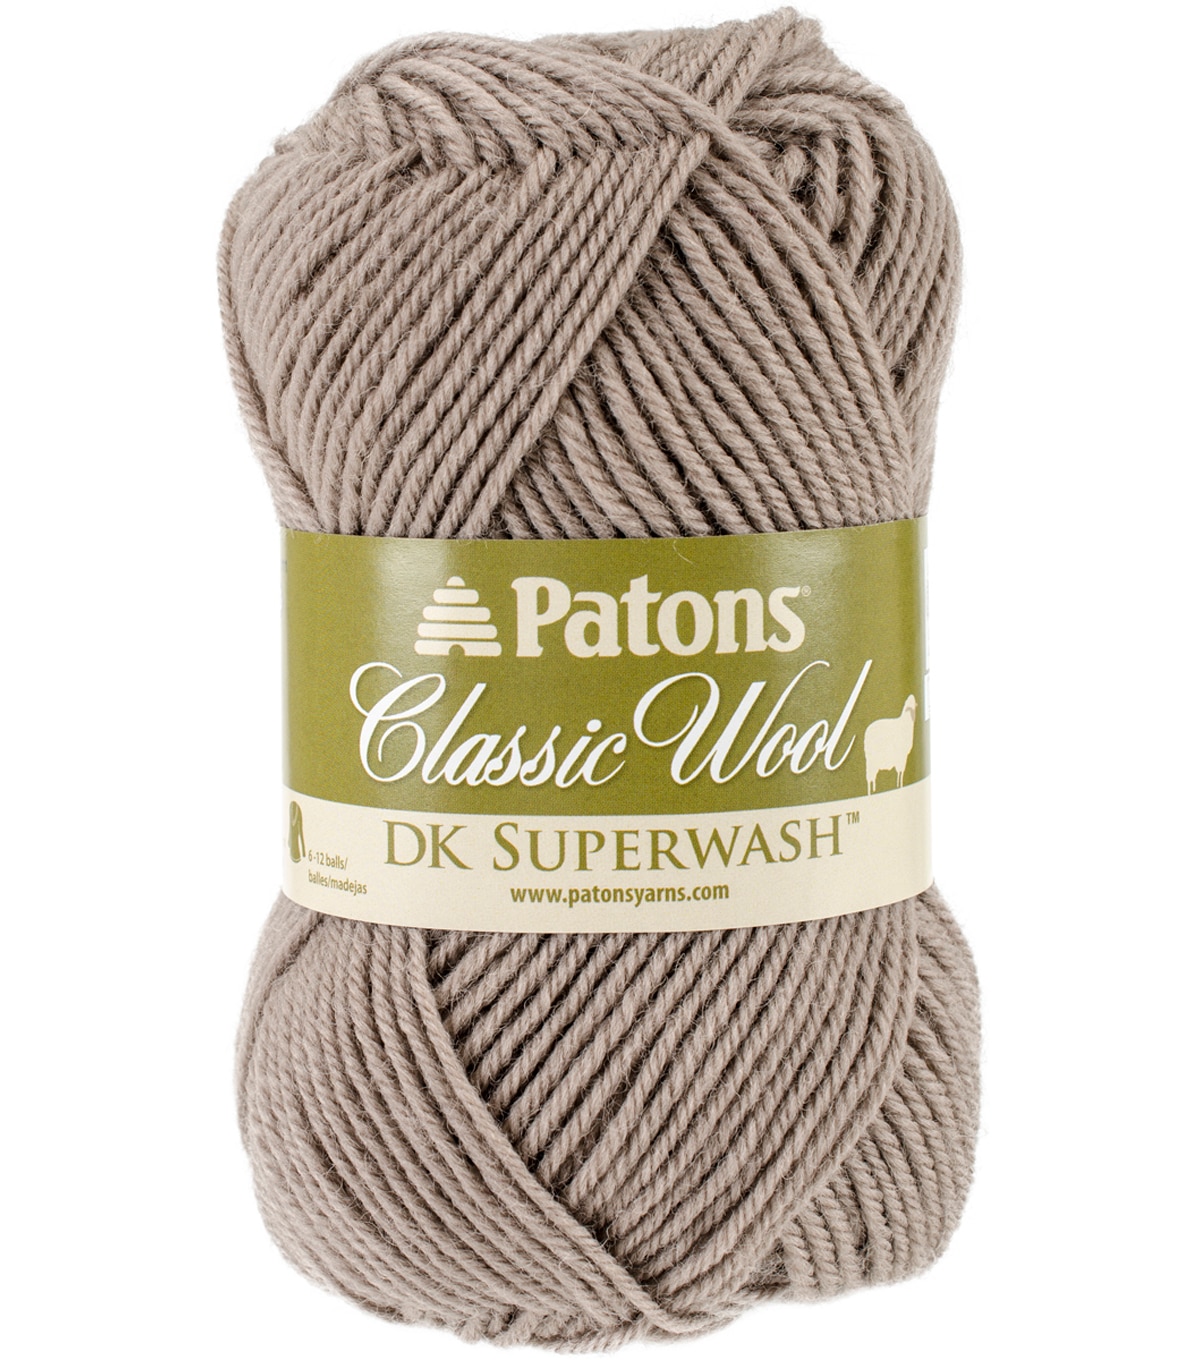 patons wool yarn